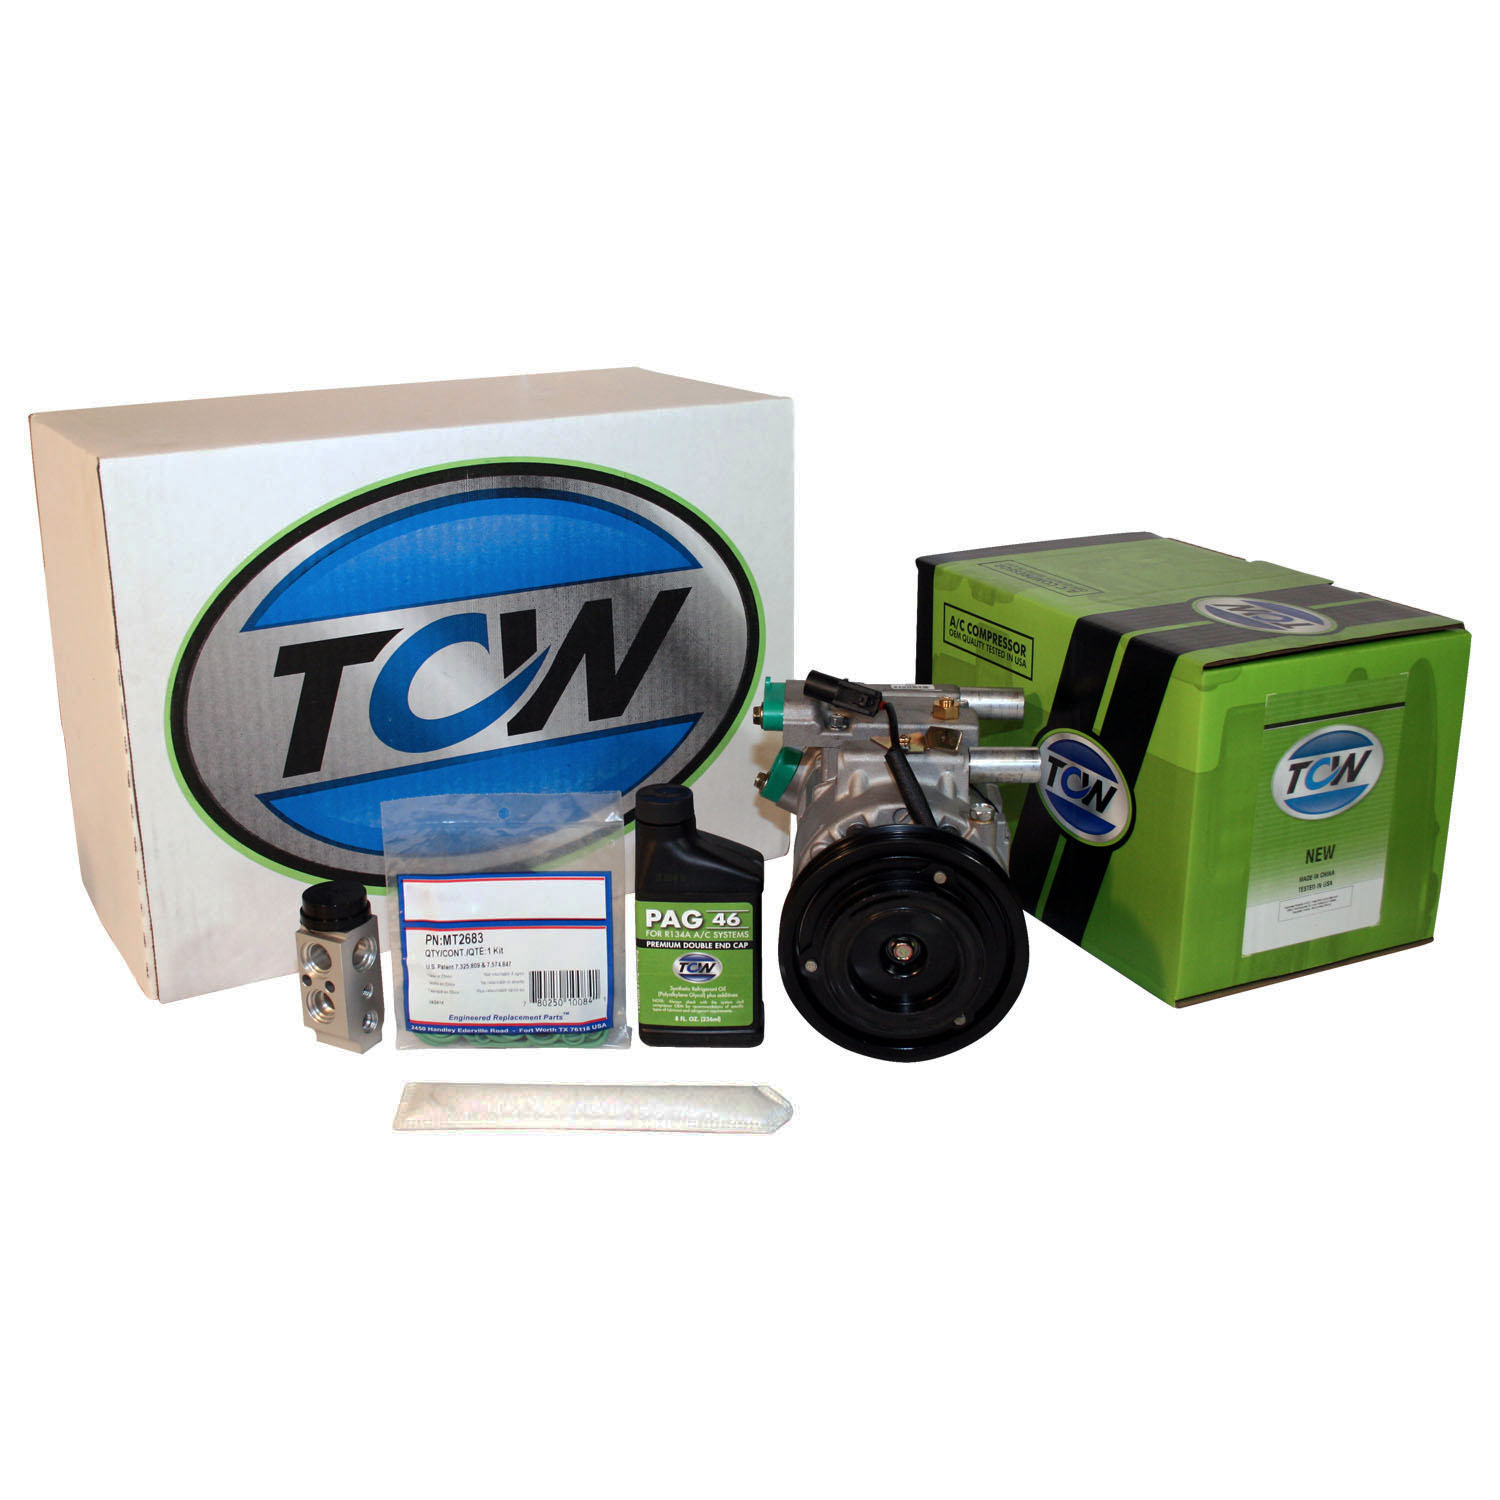 TCW Vehicle A/C Kit K1000414N New Product Image field_60b6a13a6e67c